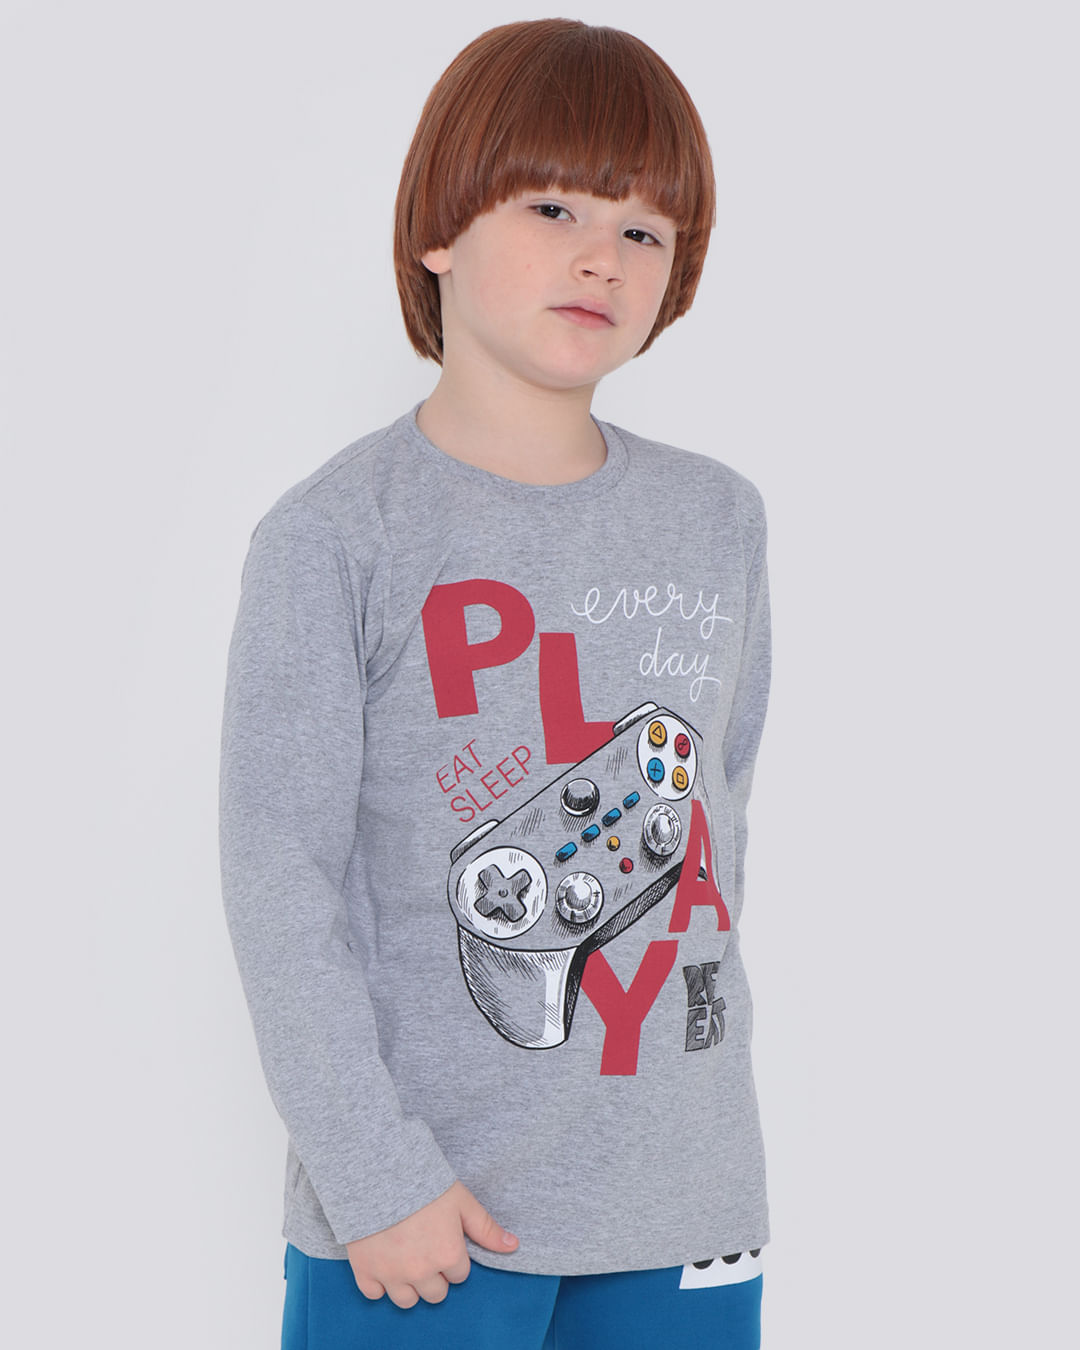 Camiseta-Infantil-Manga-Longa-Player-Cinza